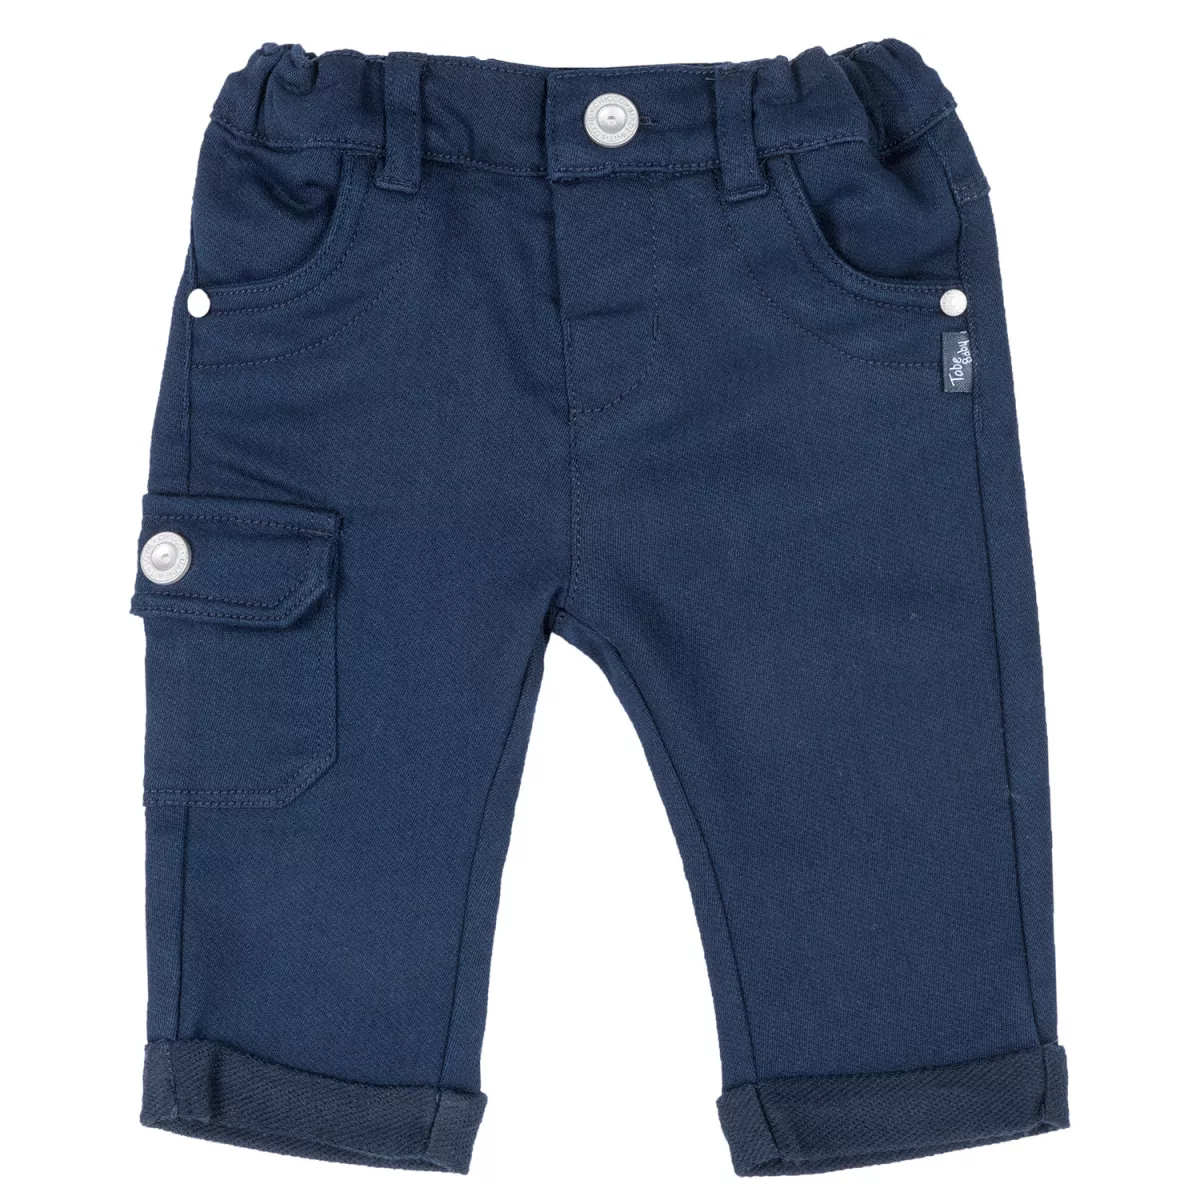 Pantalon copii Chicco, albastru inchis, 80